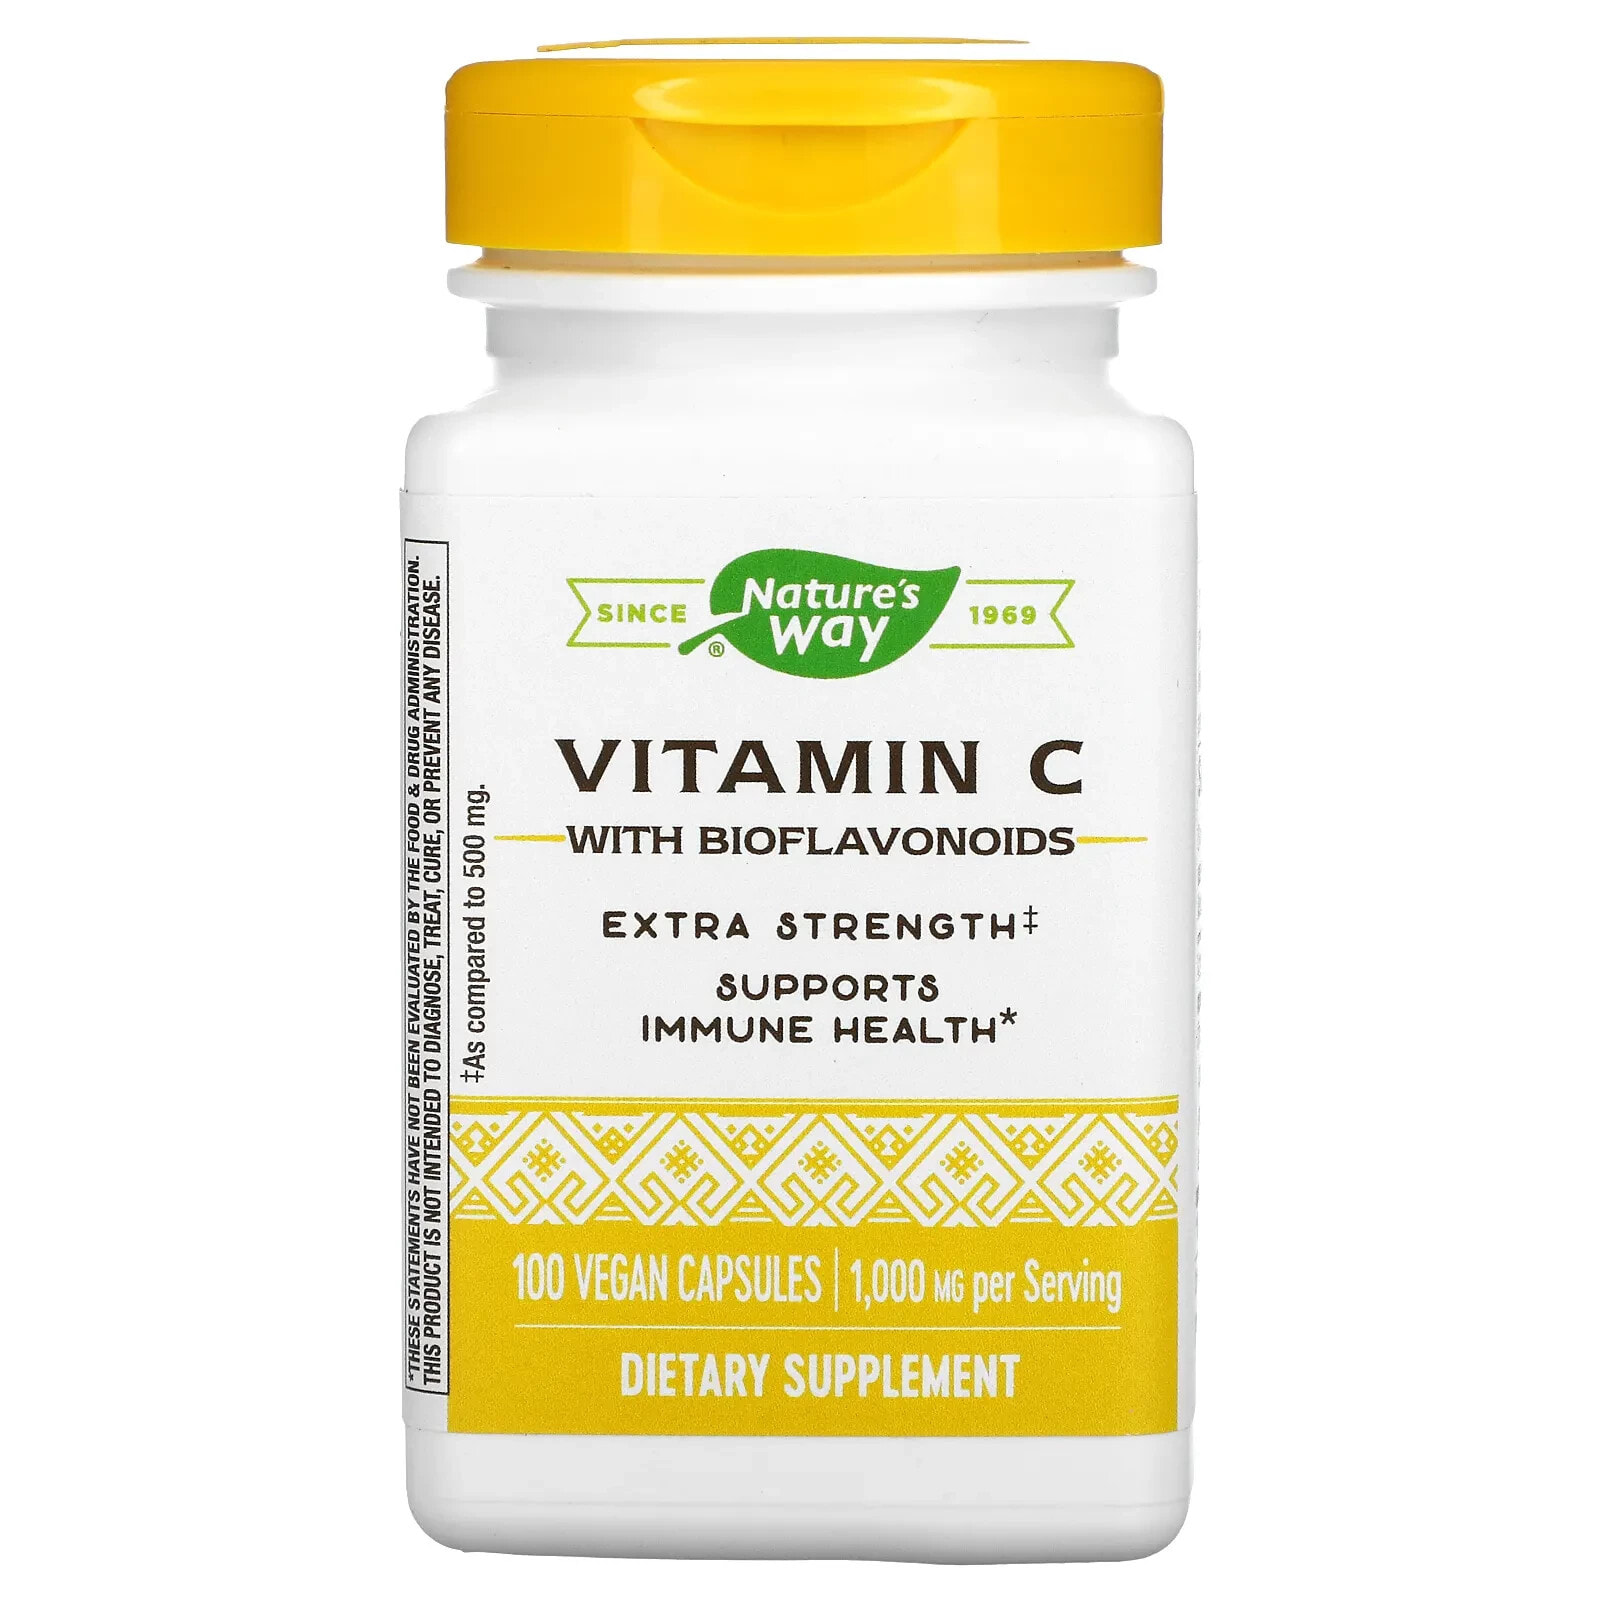 Vitamin C With Bioflavonoids, Extra Strength, 1,000 mg, 100 Vegan Capsules